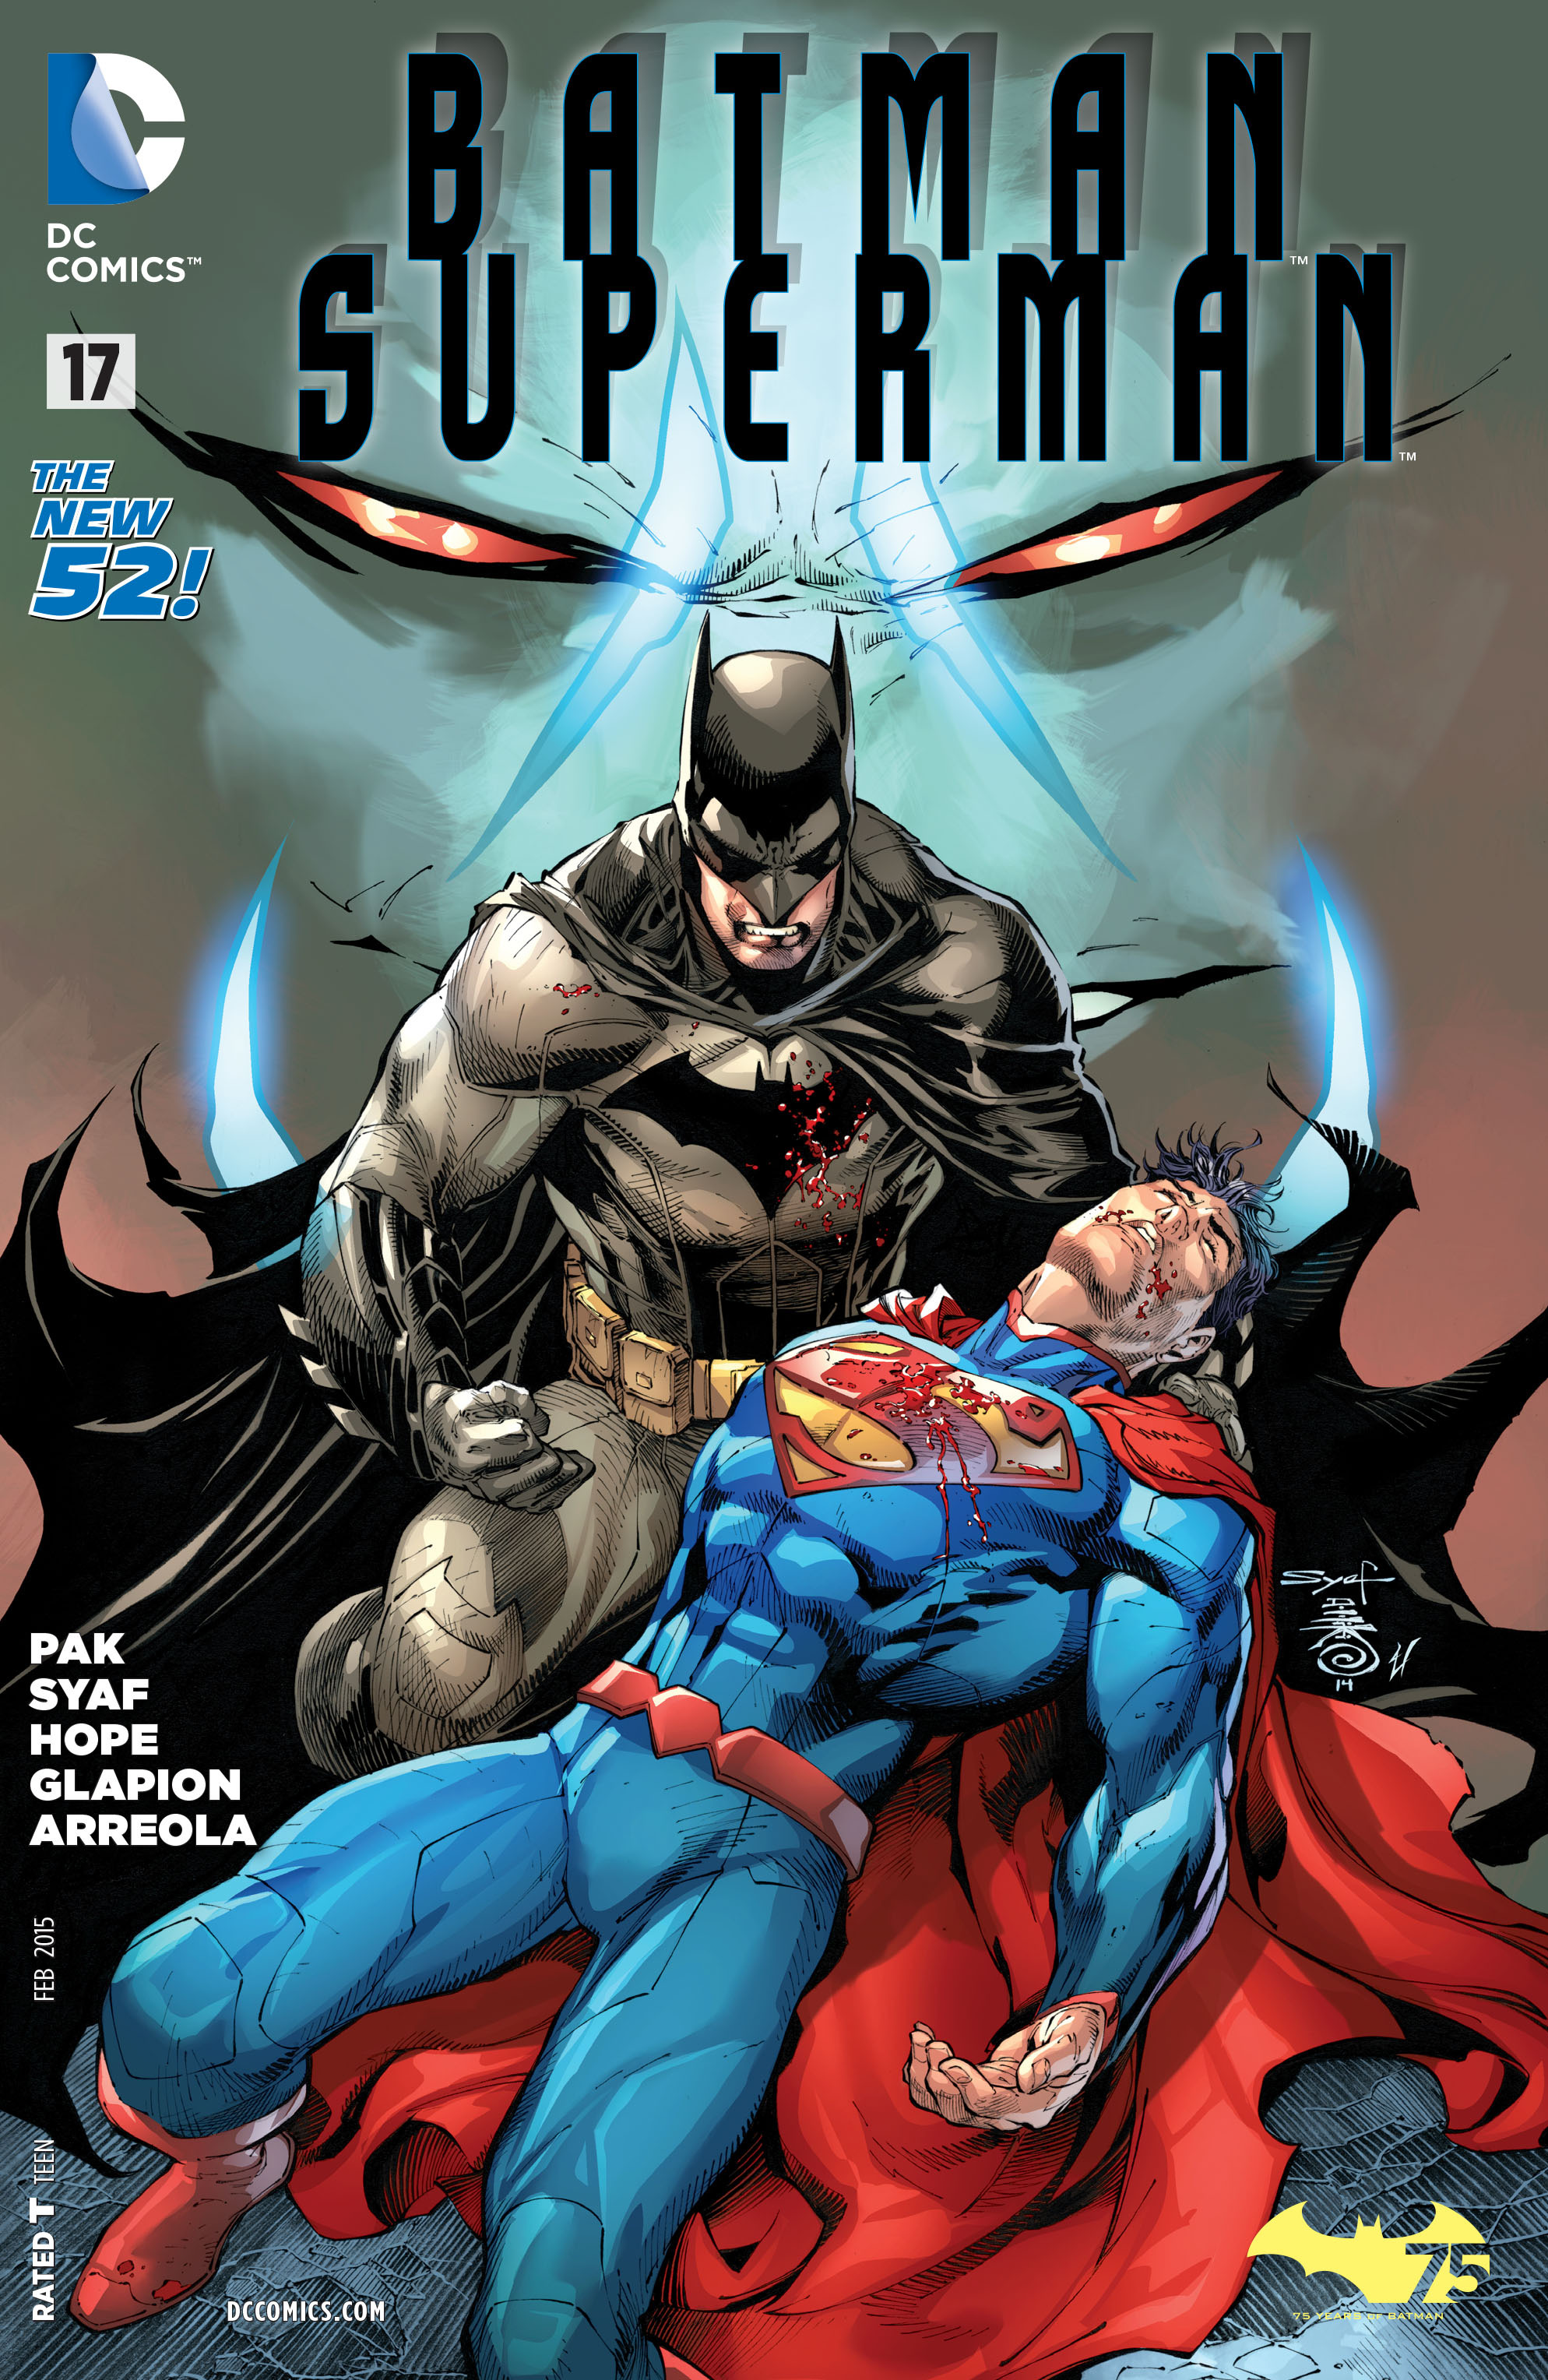 Batman Superman 2013 Issue 17 | Read Batman Superman 2013 Issue 17 comic  online in high quality. Read Full Comic online for free - Read comics online  in high quality .|